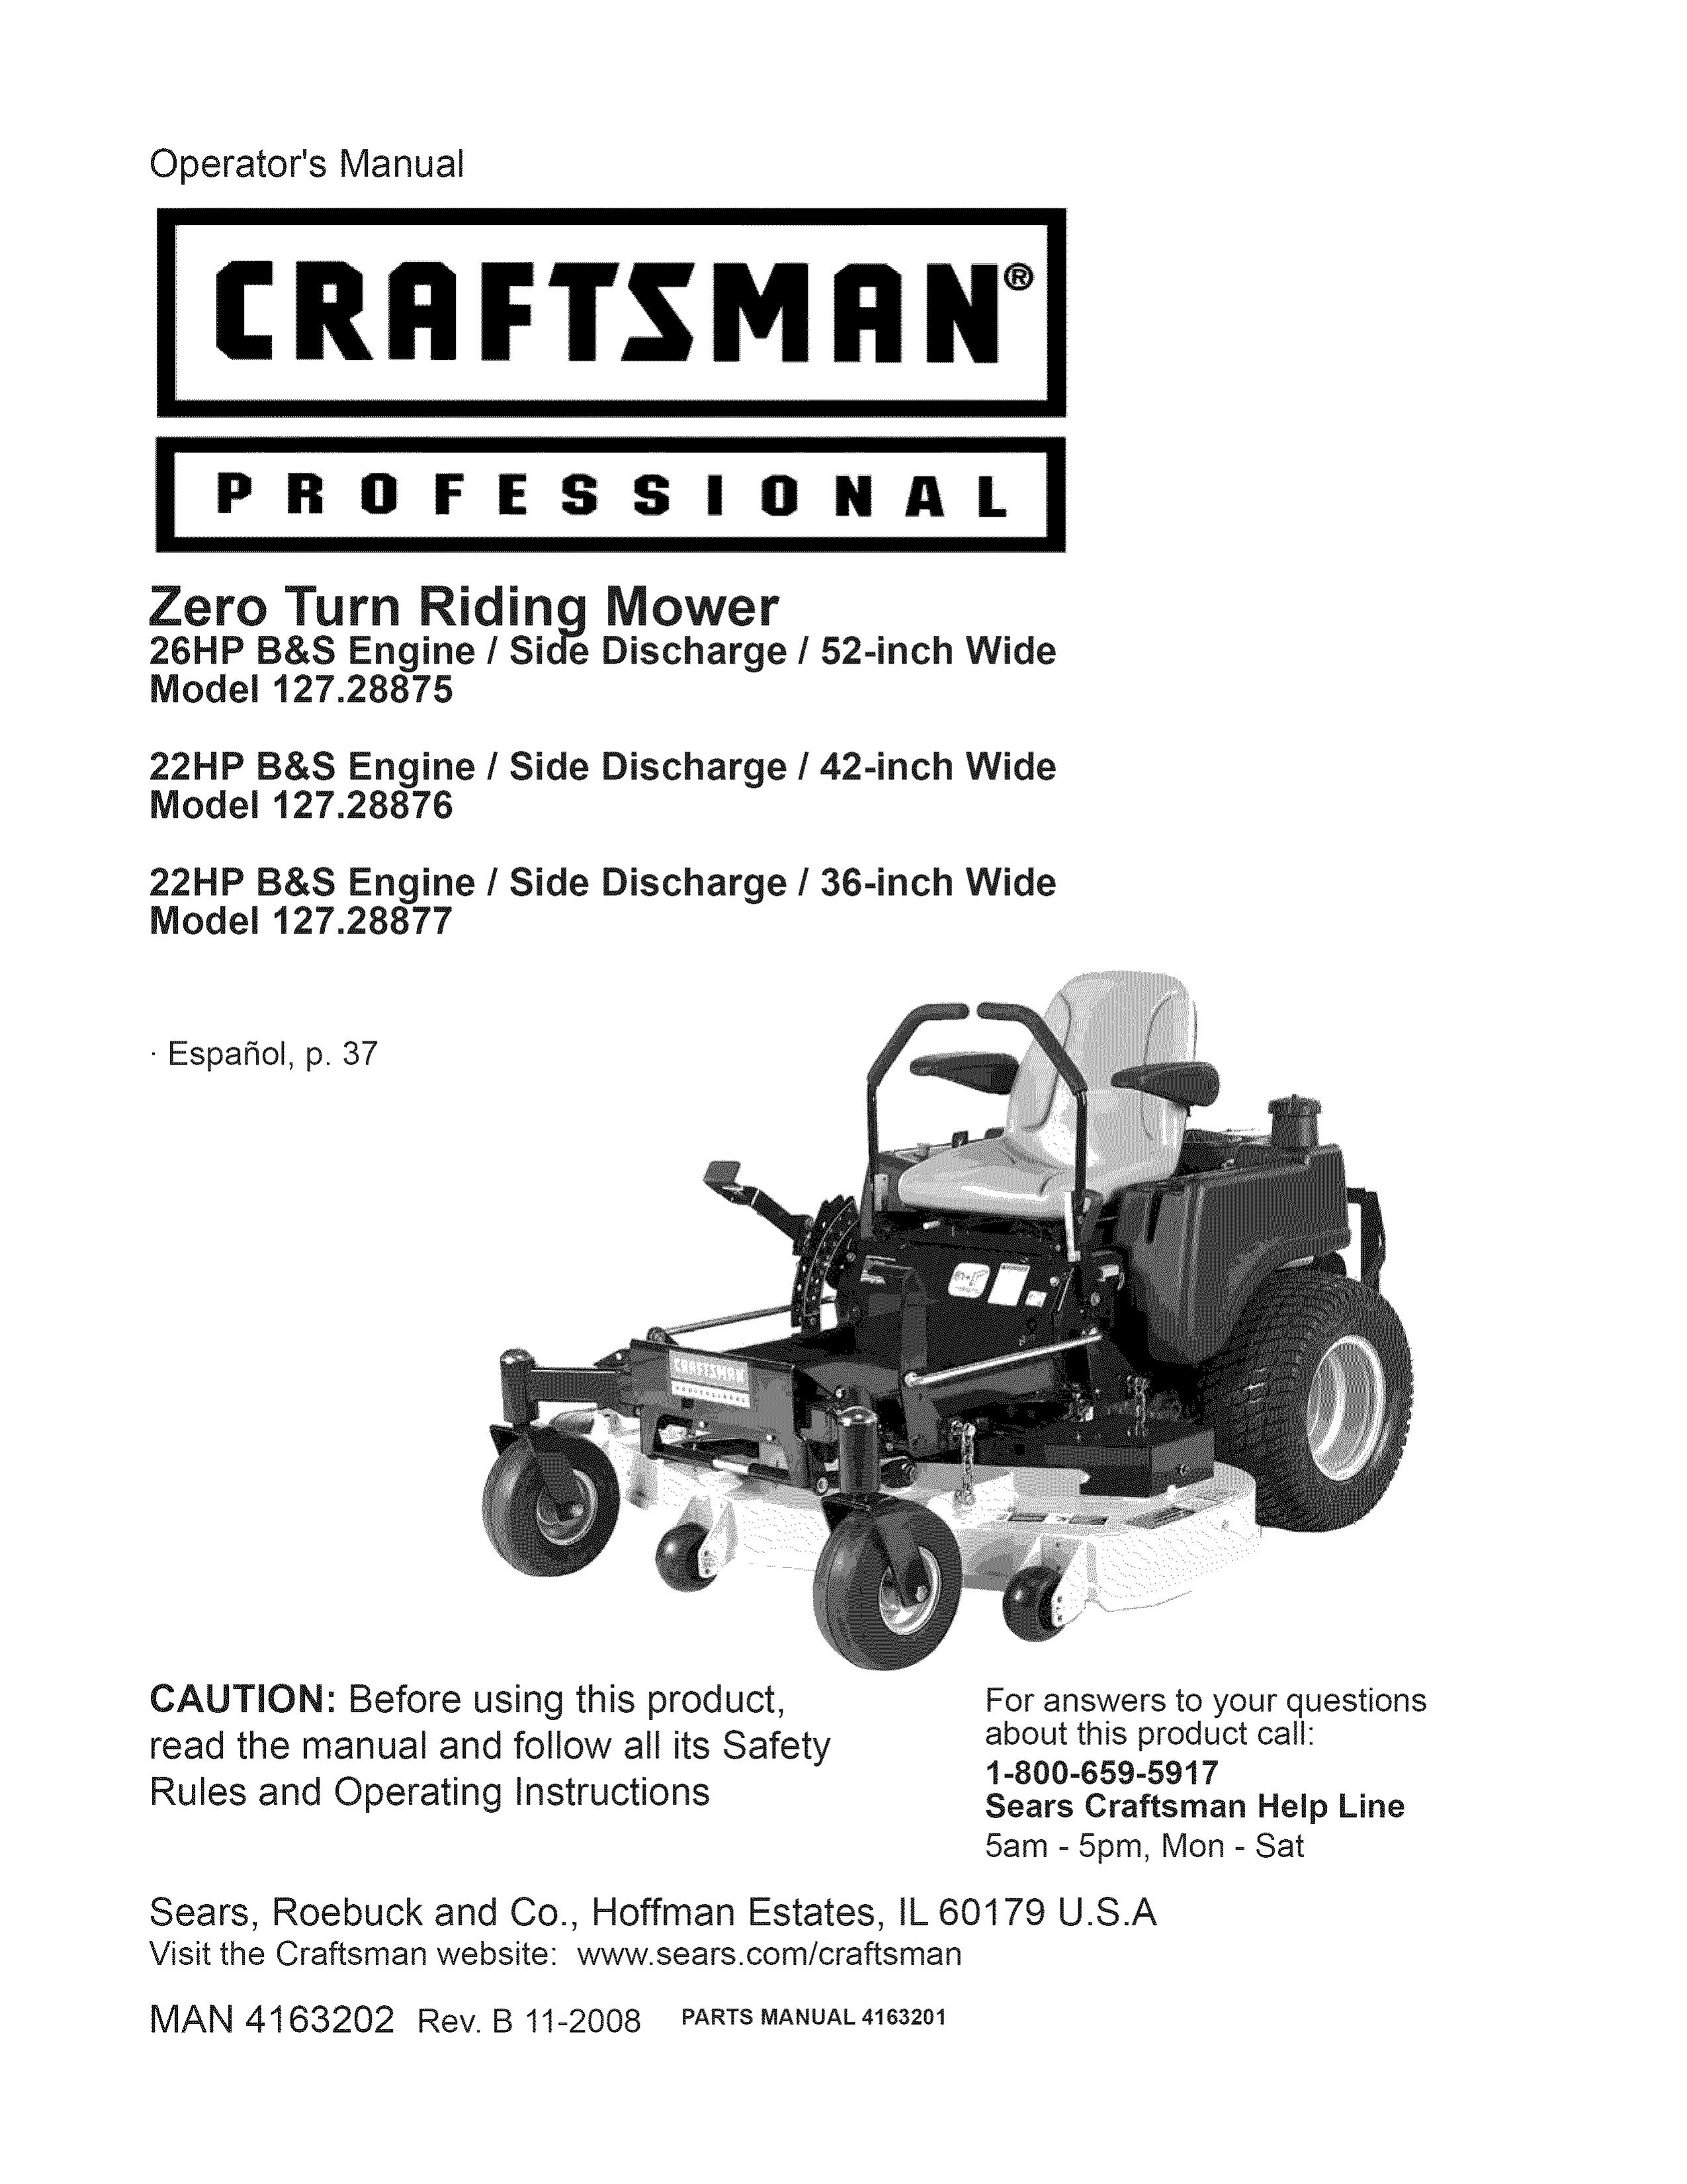 Craftsman 127.28877 Lawn Mower User Manual